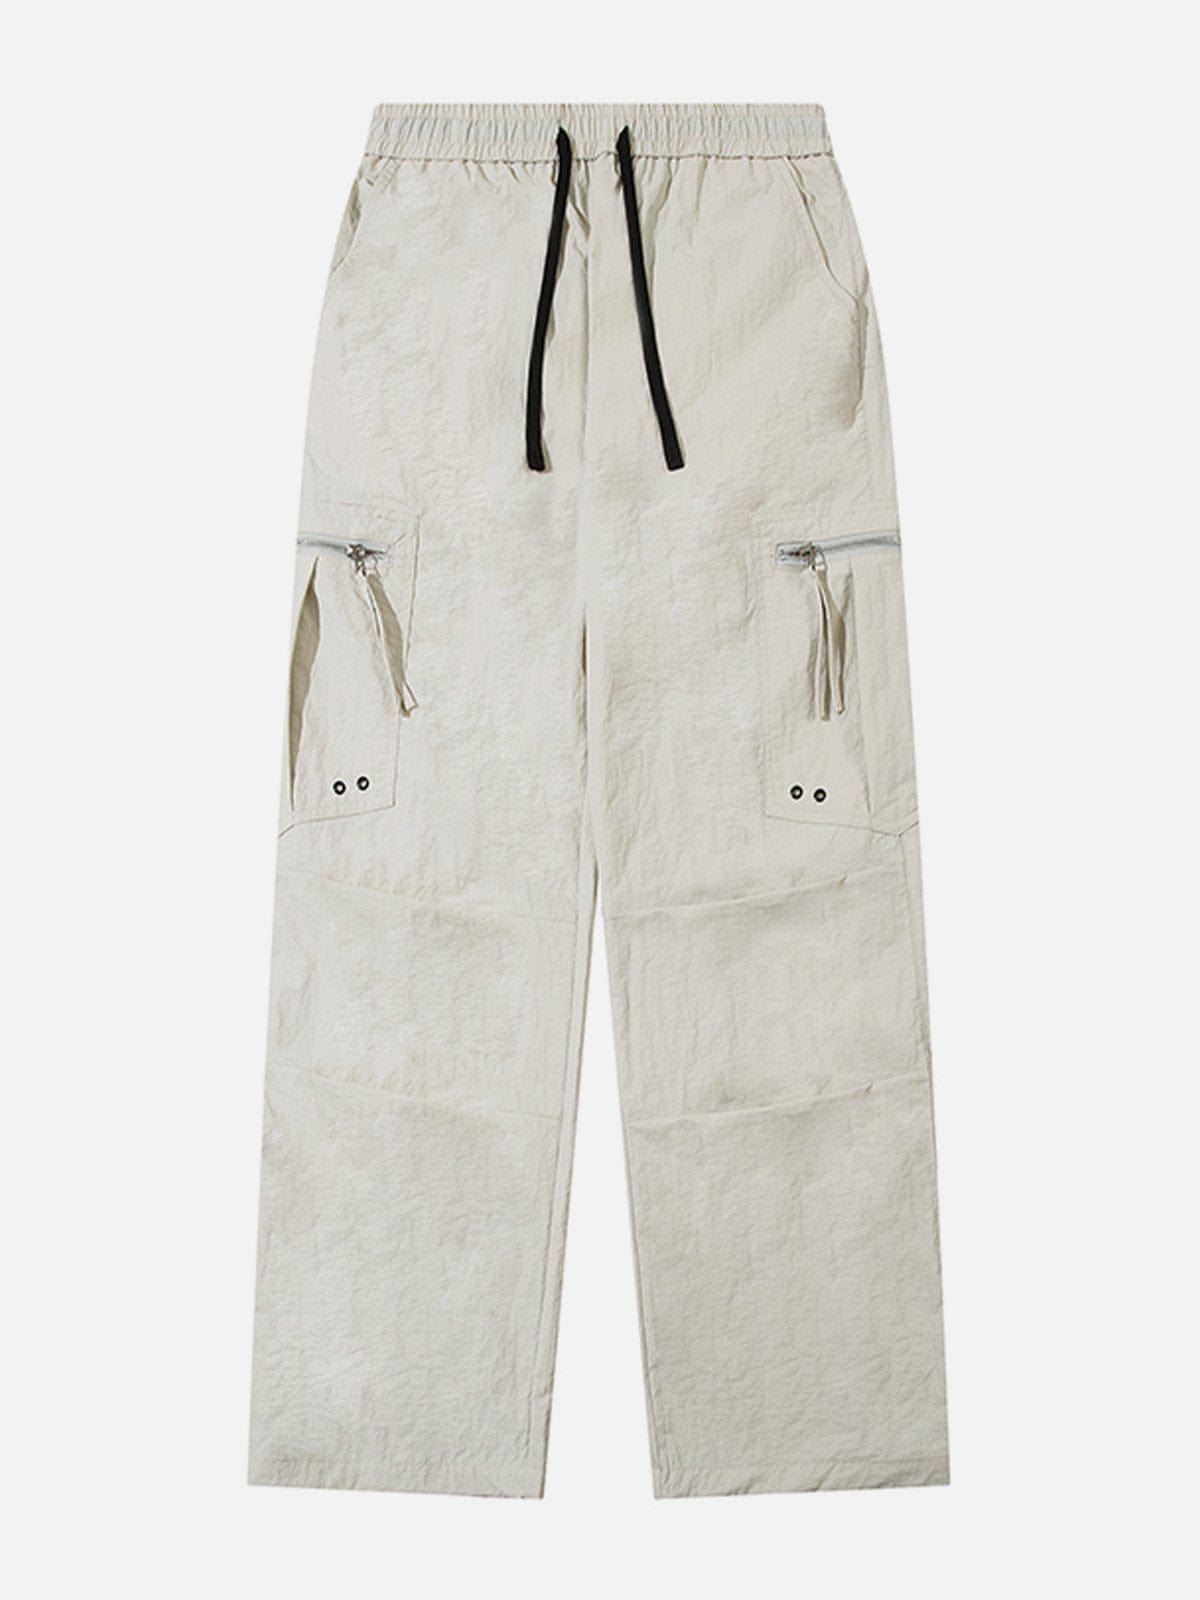 NEV Zippered Drawstring Waterproof Pants